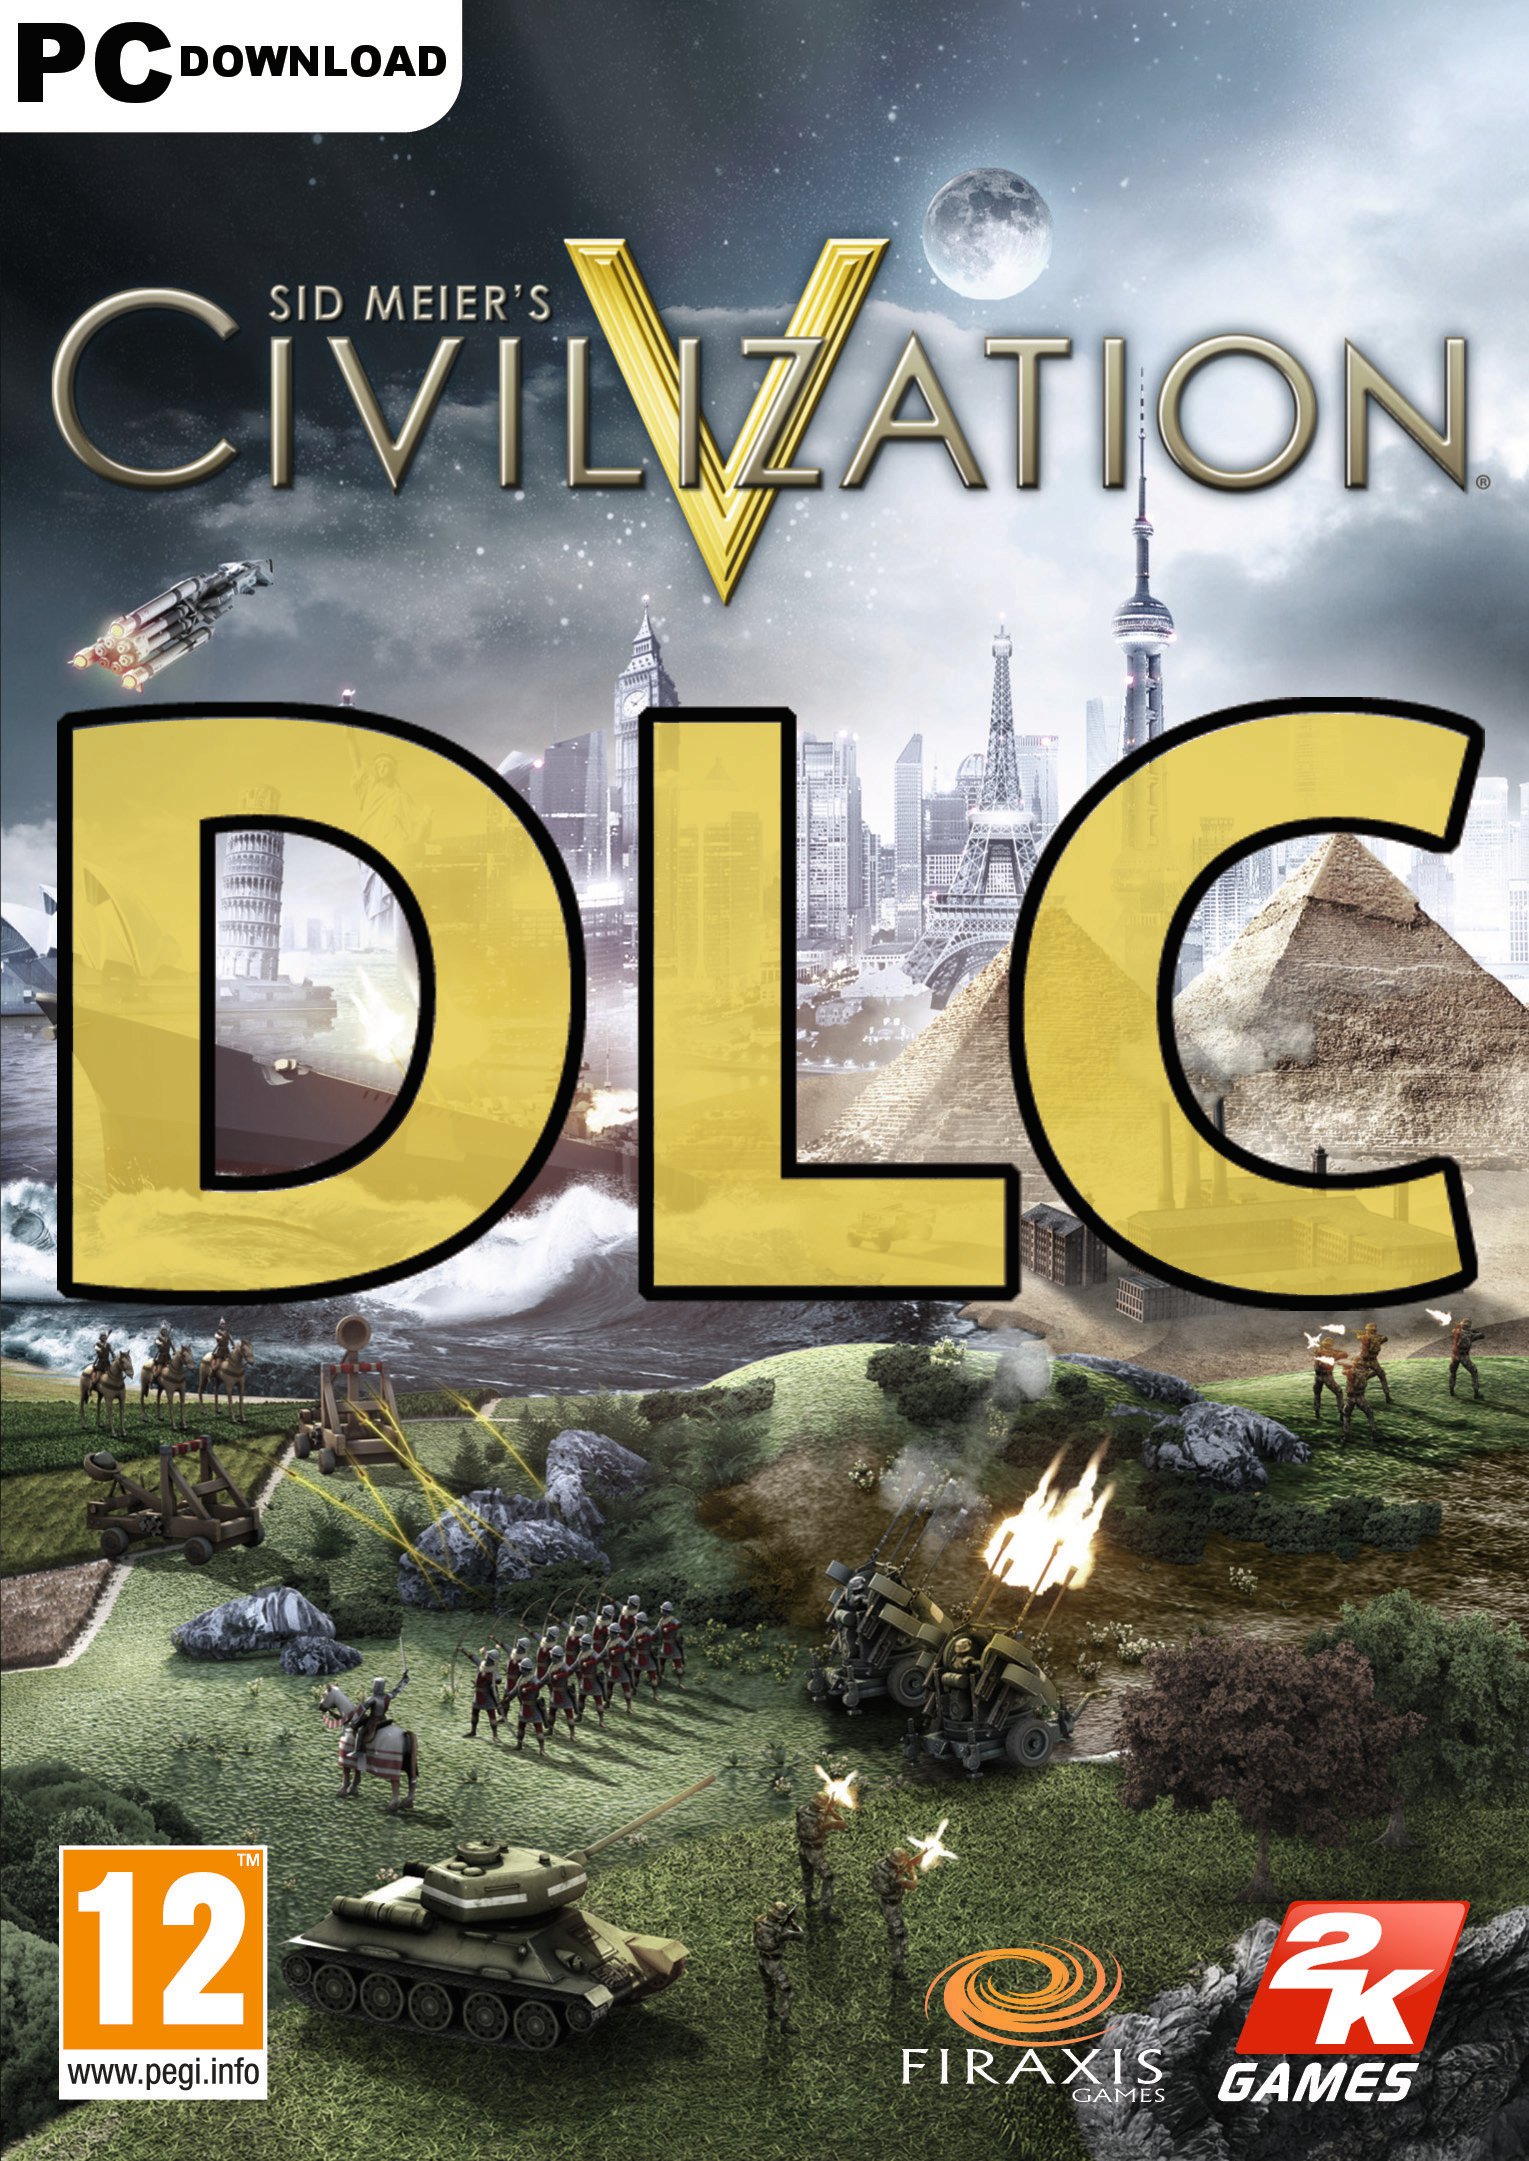 Sid Meier's Civilization® V: Double Civilization and Scenario Pack: Spain (Isabella) and Inca (Pachacuti)